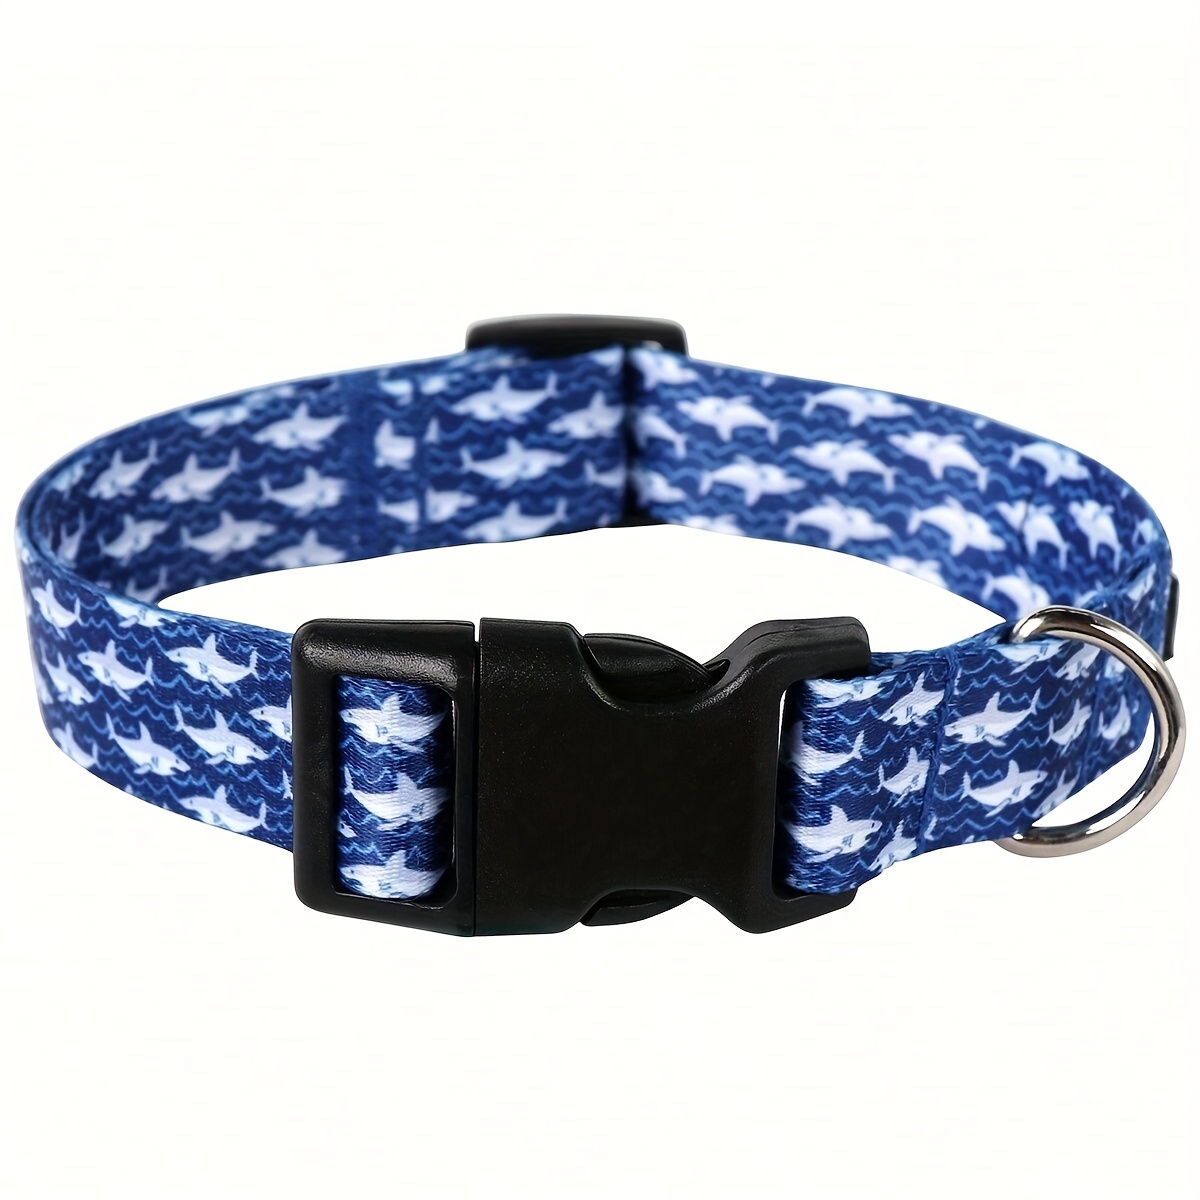 

Light Blue Shark Pattern Cotton Dog Collar - Adjustable, Comfort Fit For Small To Medium Breeds